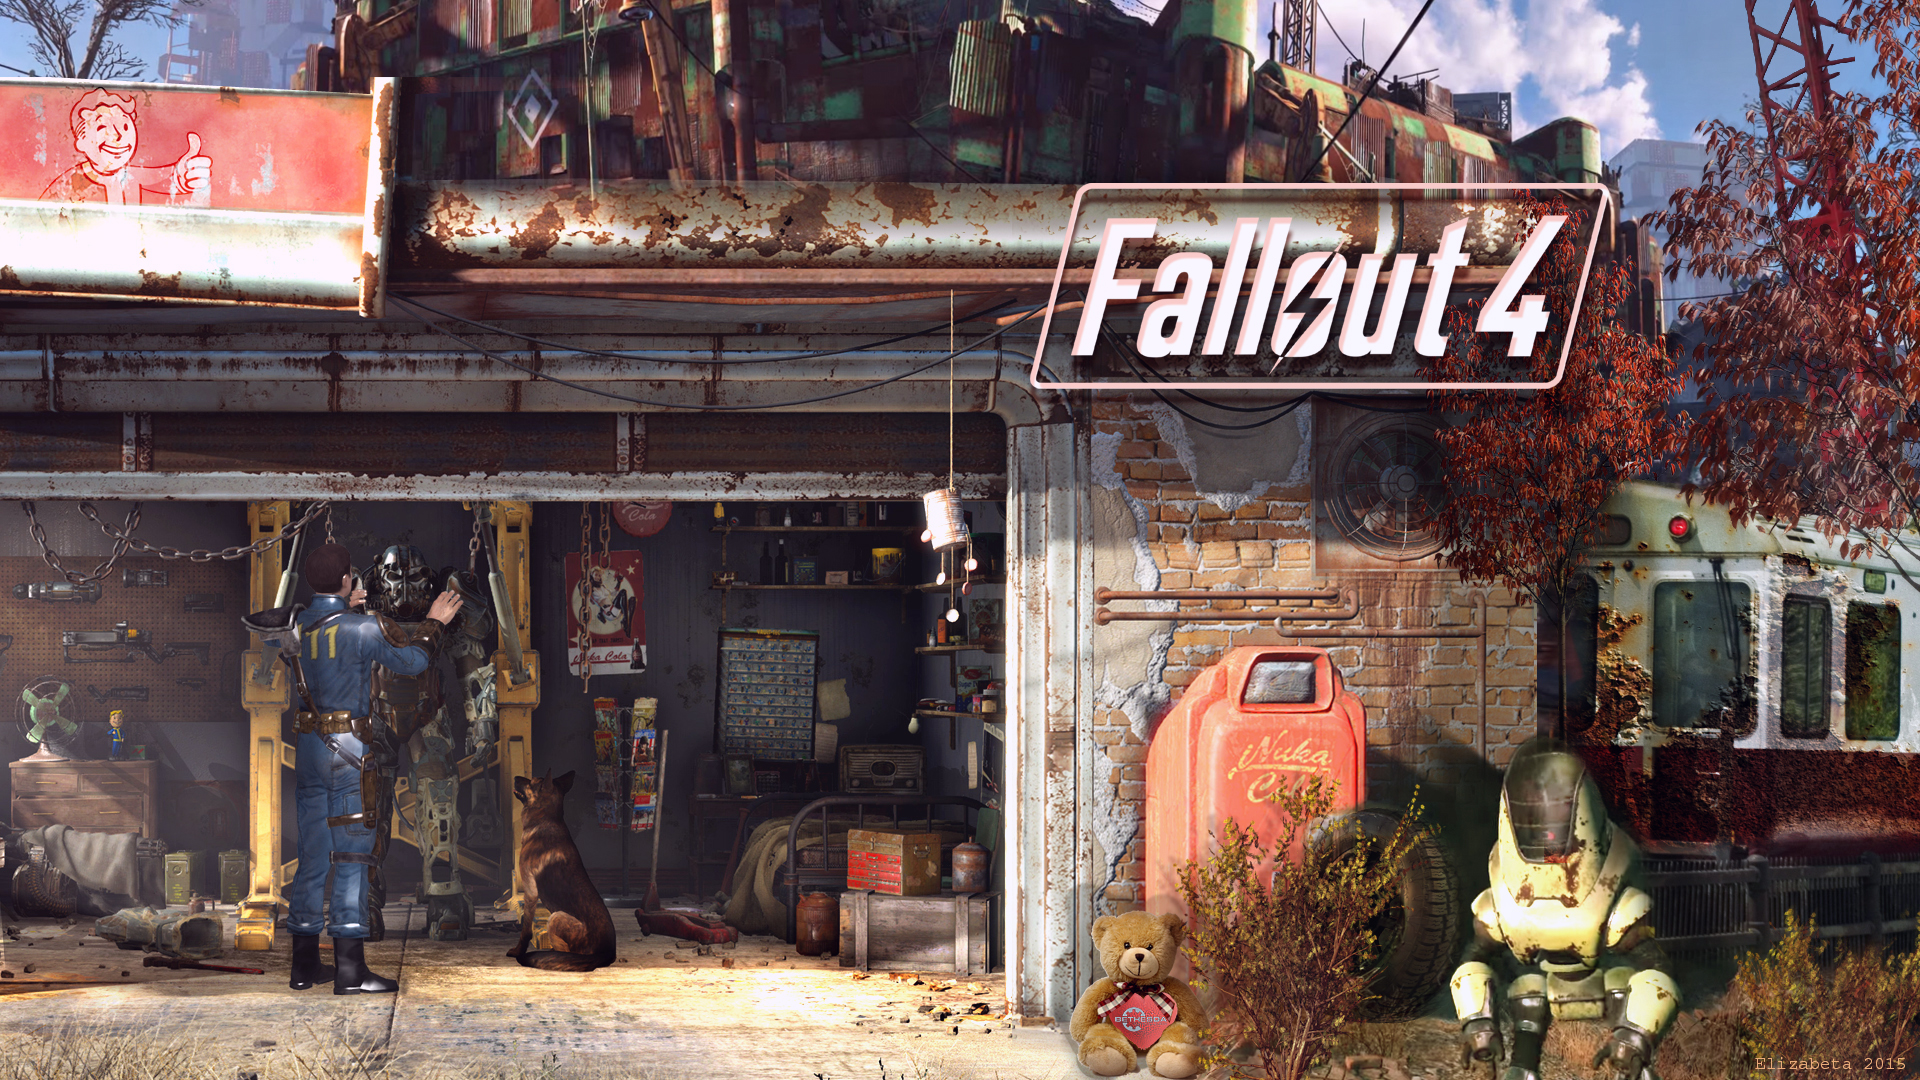 44 Fallout 4 Mobile Wallpaper On Wallpapersafari